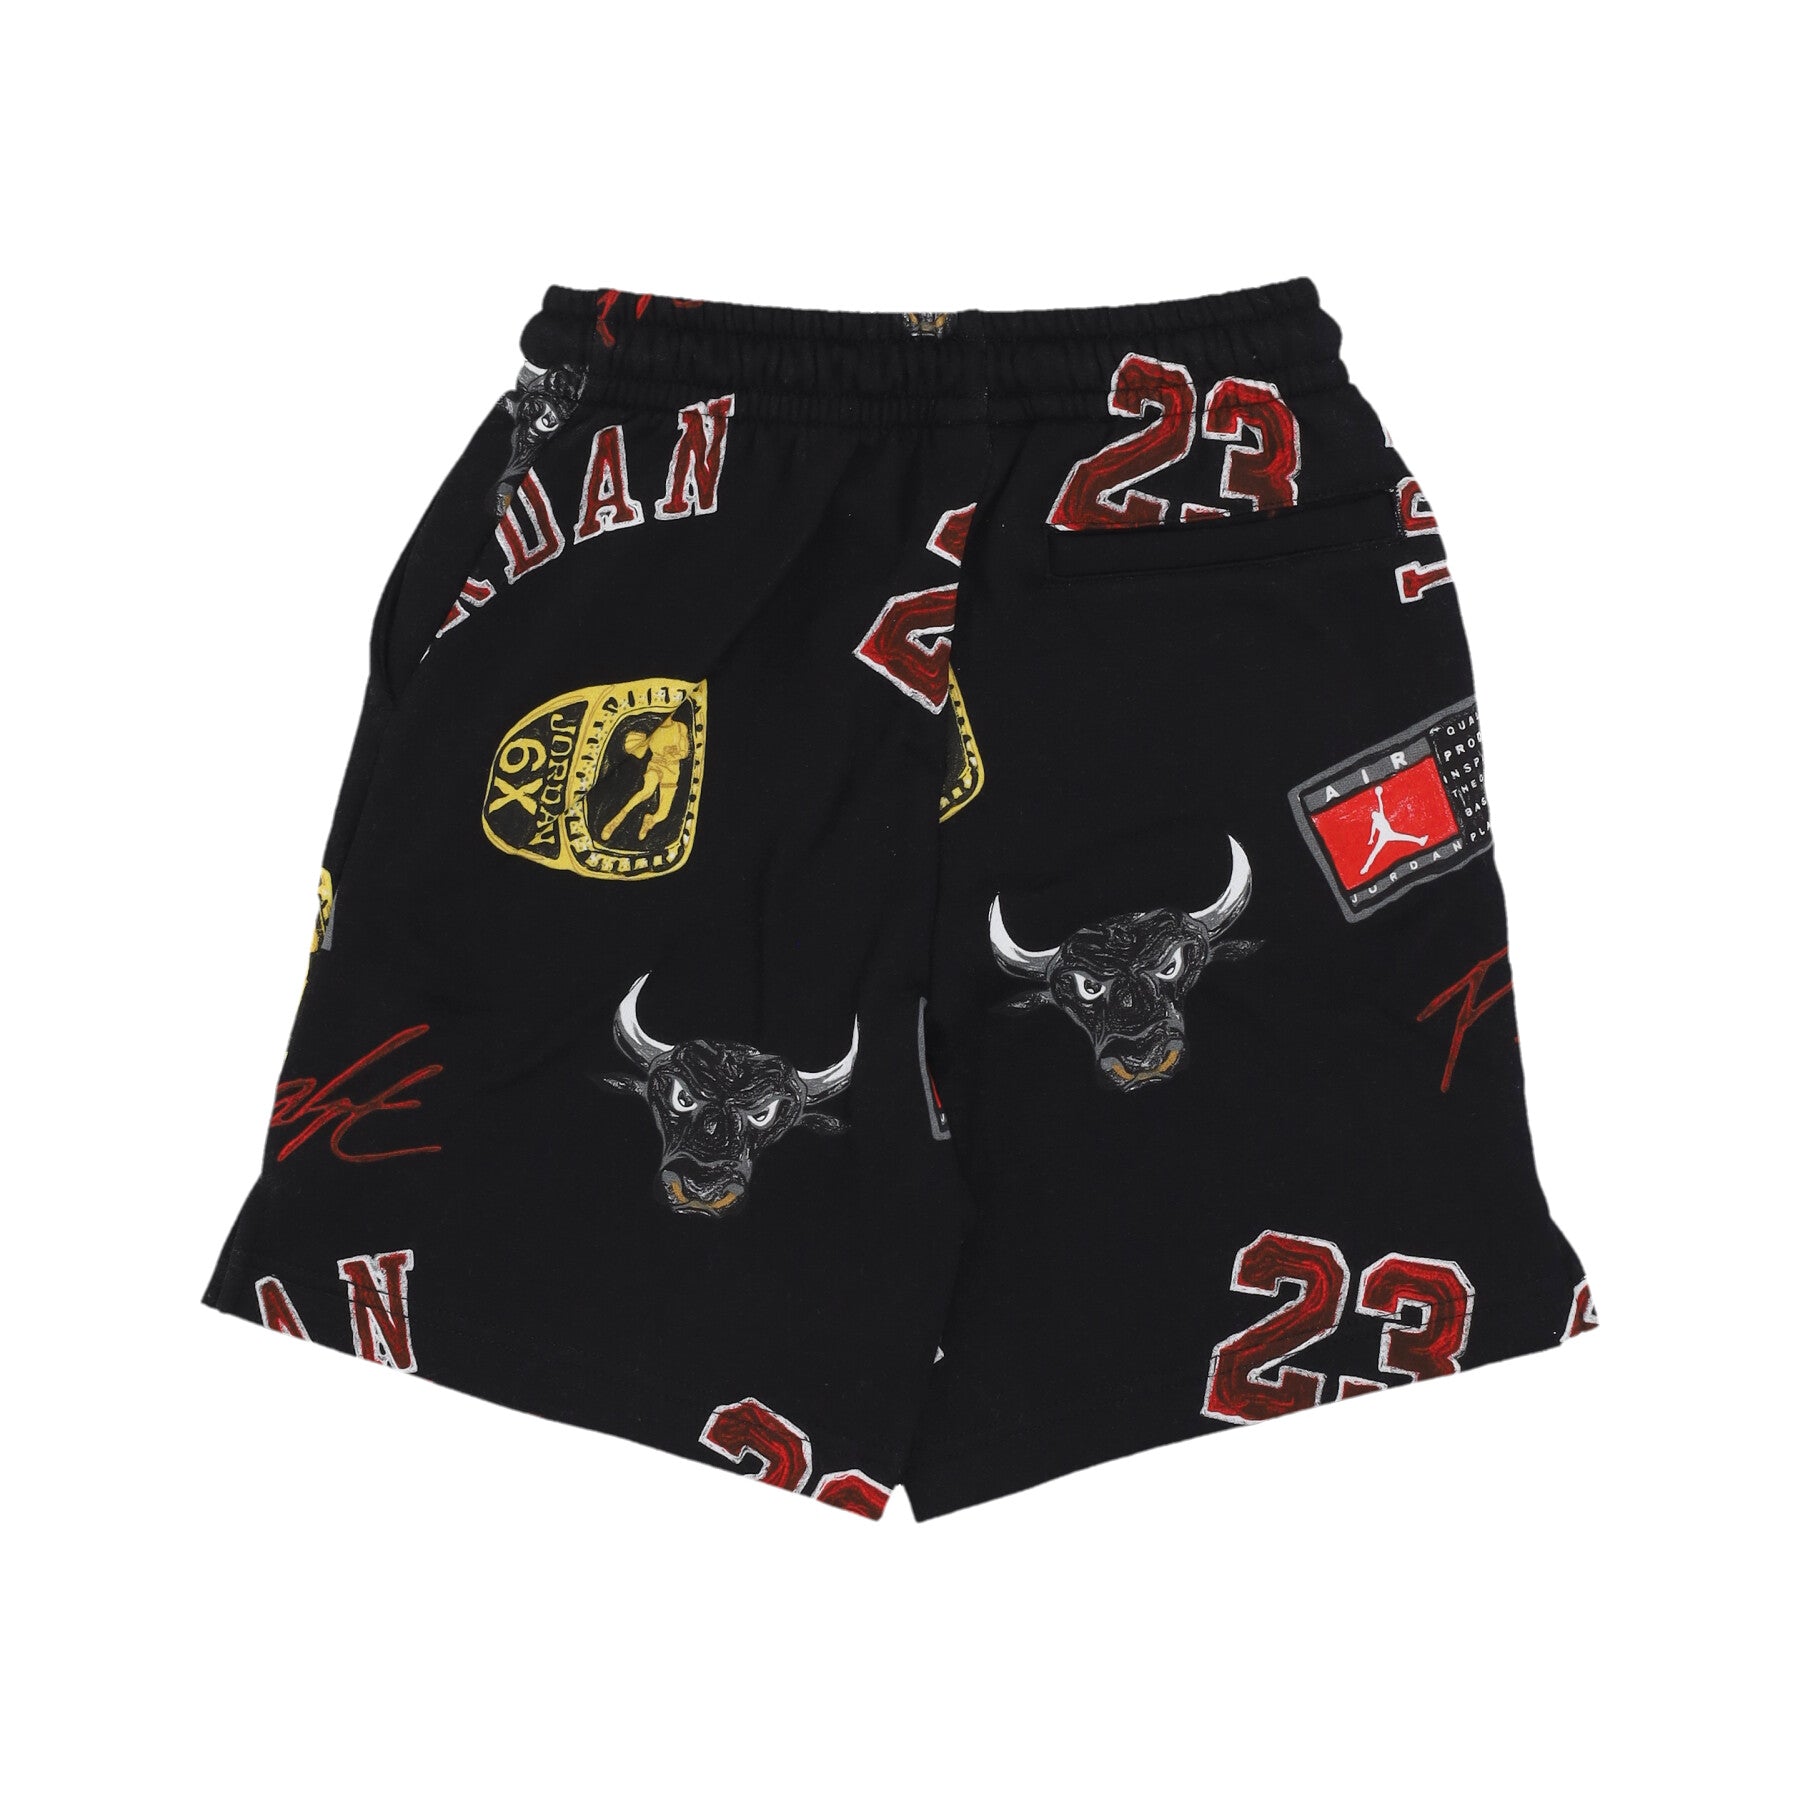 Pantalone Corto Tuta Felpato Ragazzo Essentials Aop Fleece Shorts Black 95C898-023